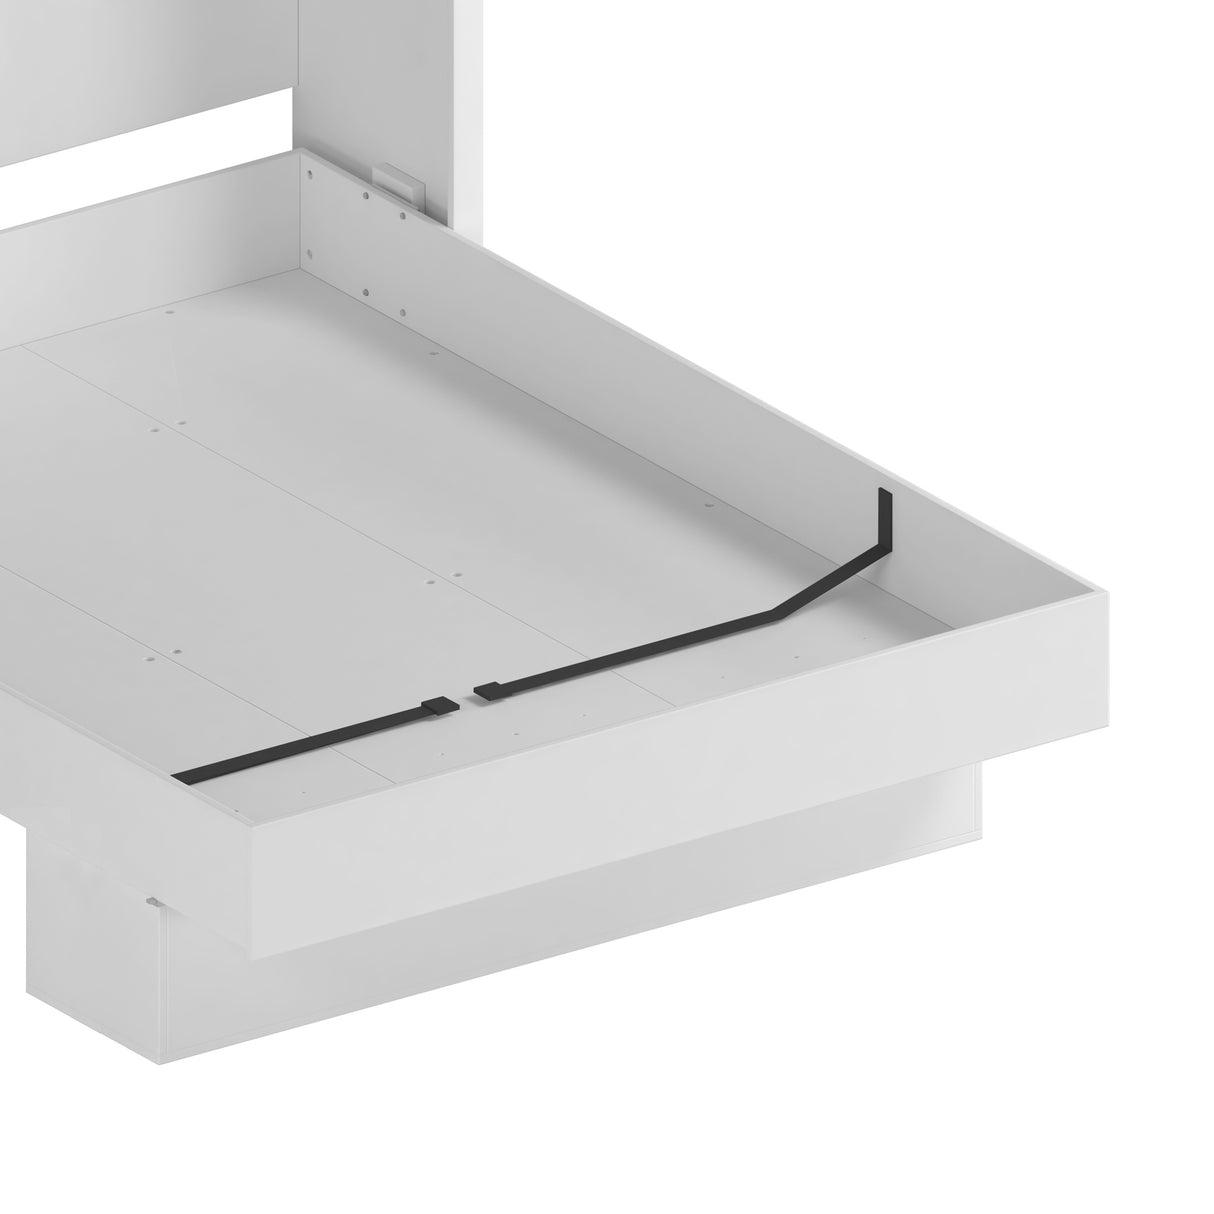 Easy-Lift Full Murphy Wall Bed in Dark Grey with Shelf